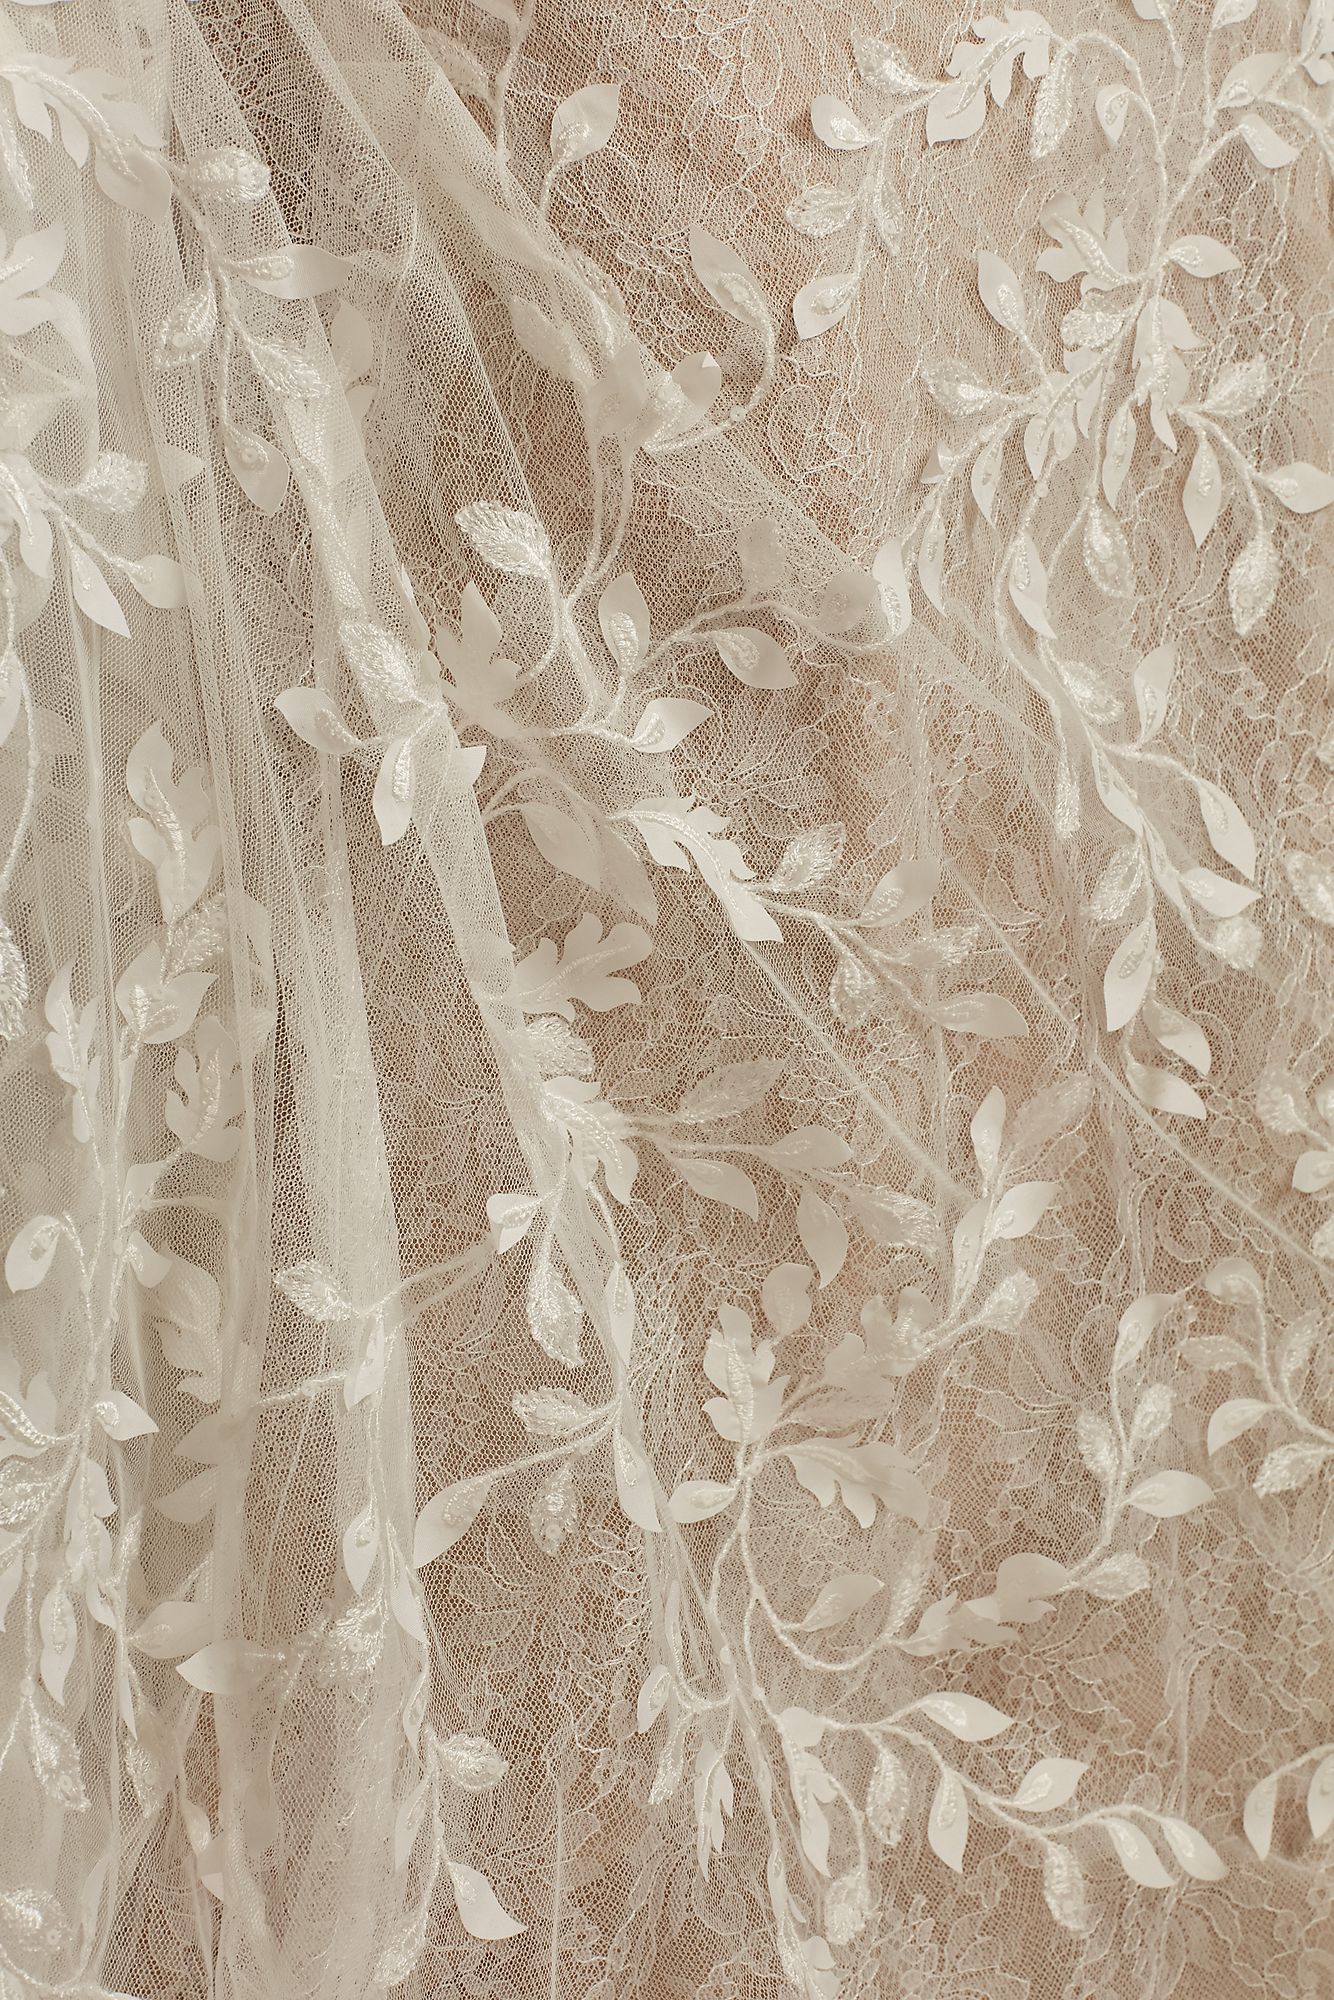 3D Leaves Applique Lace V-Neck Wedding Dress MS251223